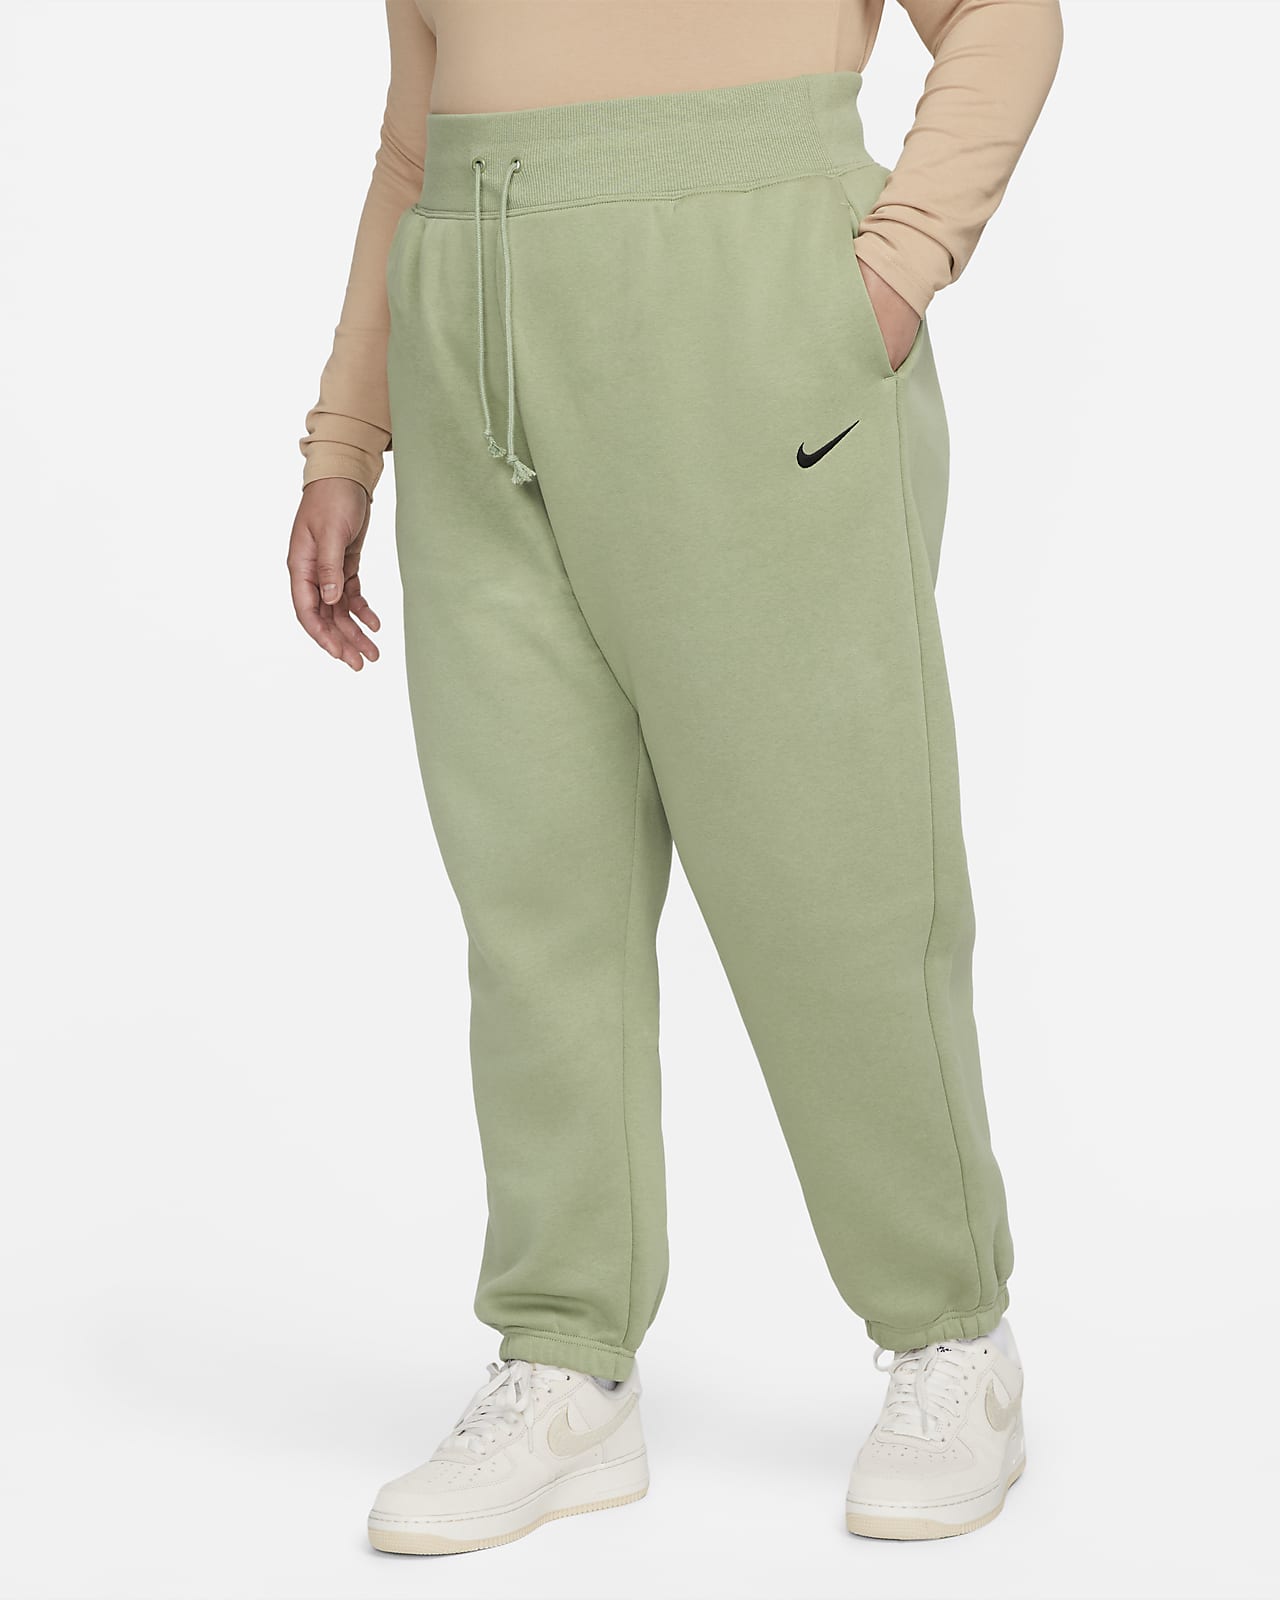 Kamer Voorzieningen Scepticisme Nike Sportswear Phoenix Fleece Oversized joggingbroek met hoge taille voor  dames (Plus Size). Nike NL